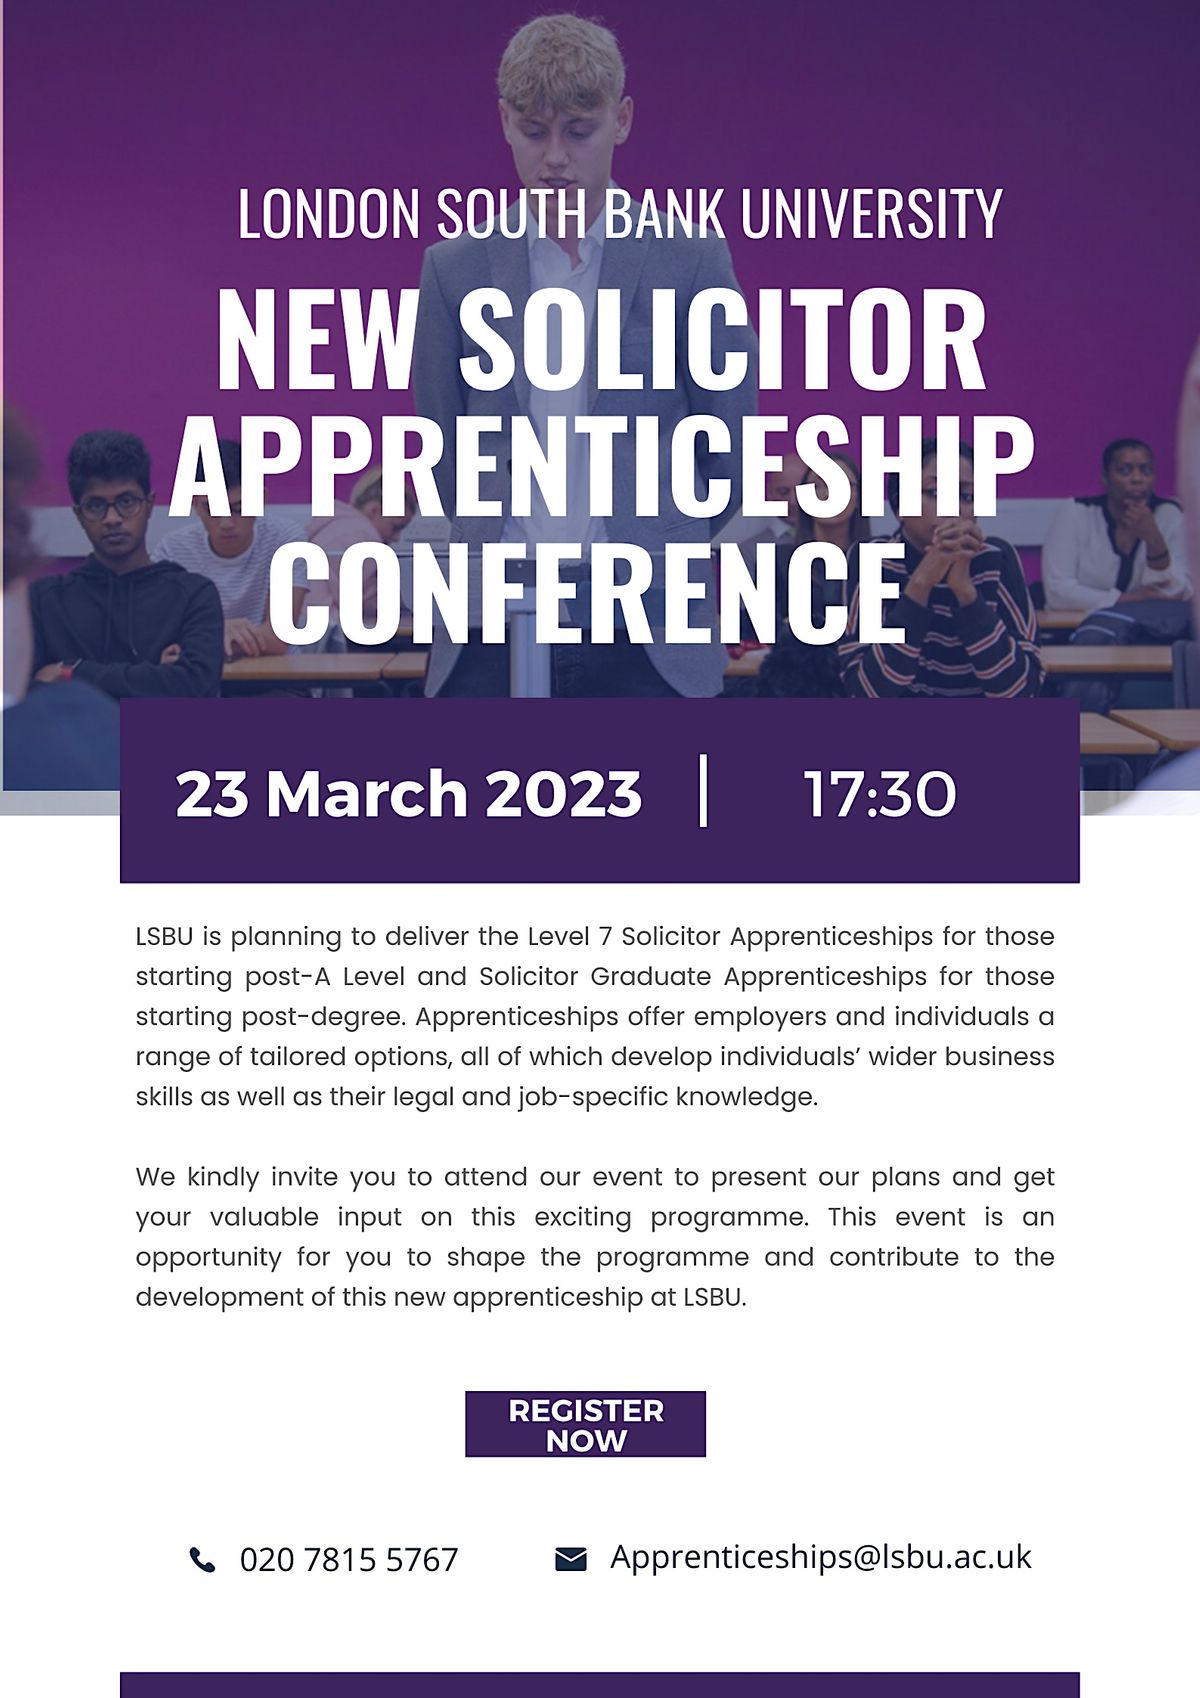 LSBU Solicitor Apprenticeship Conference, London South Bank University